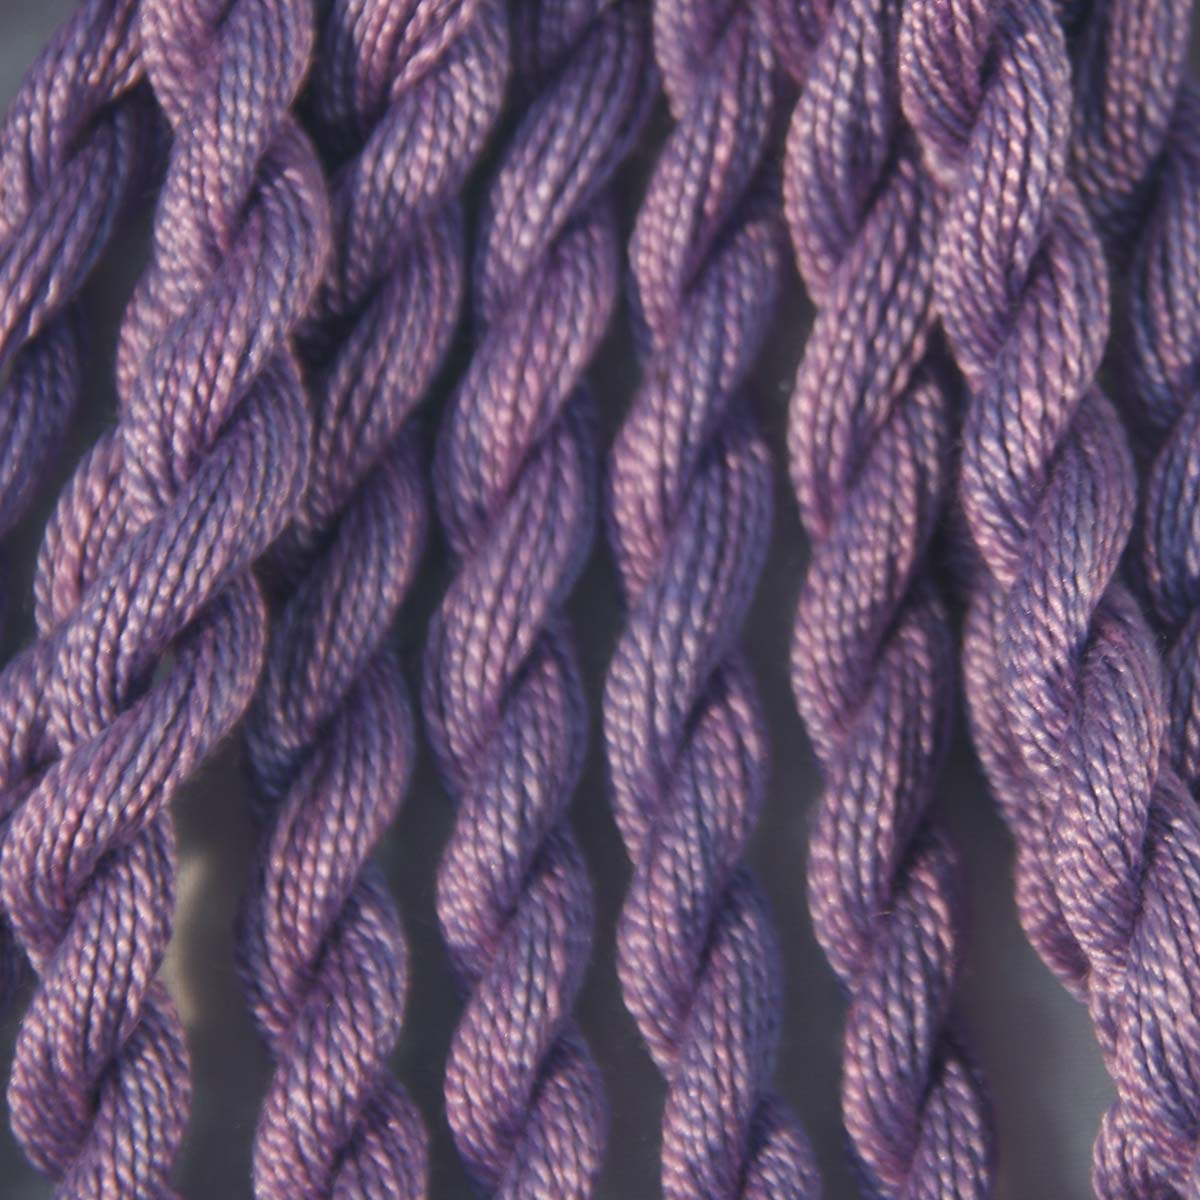 www.colourstreams.com.au Colour Streams Hand Dyed Cotton Threads Cotto Strands Slow Stitch Embroidery Textile Arts Fibre DL 17 Jacaranda Purples